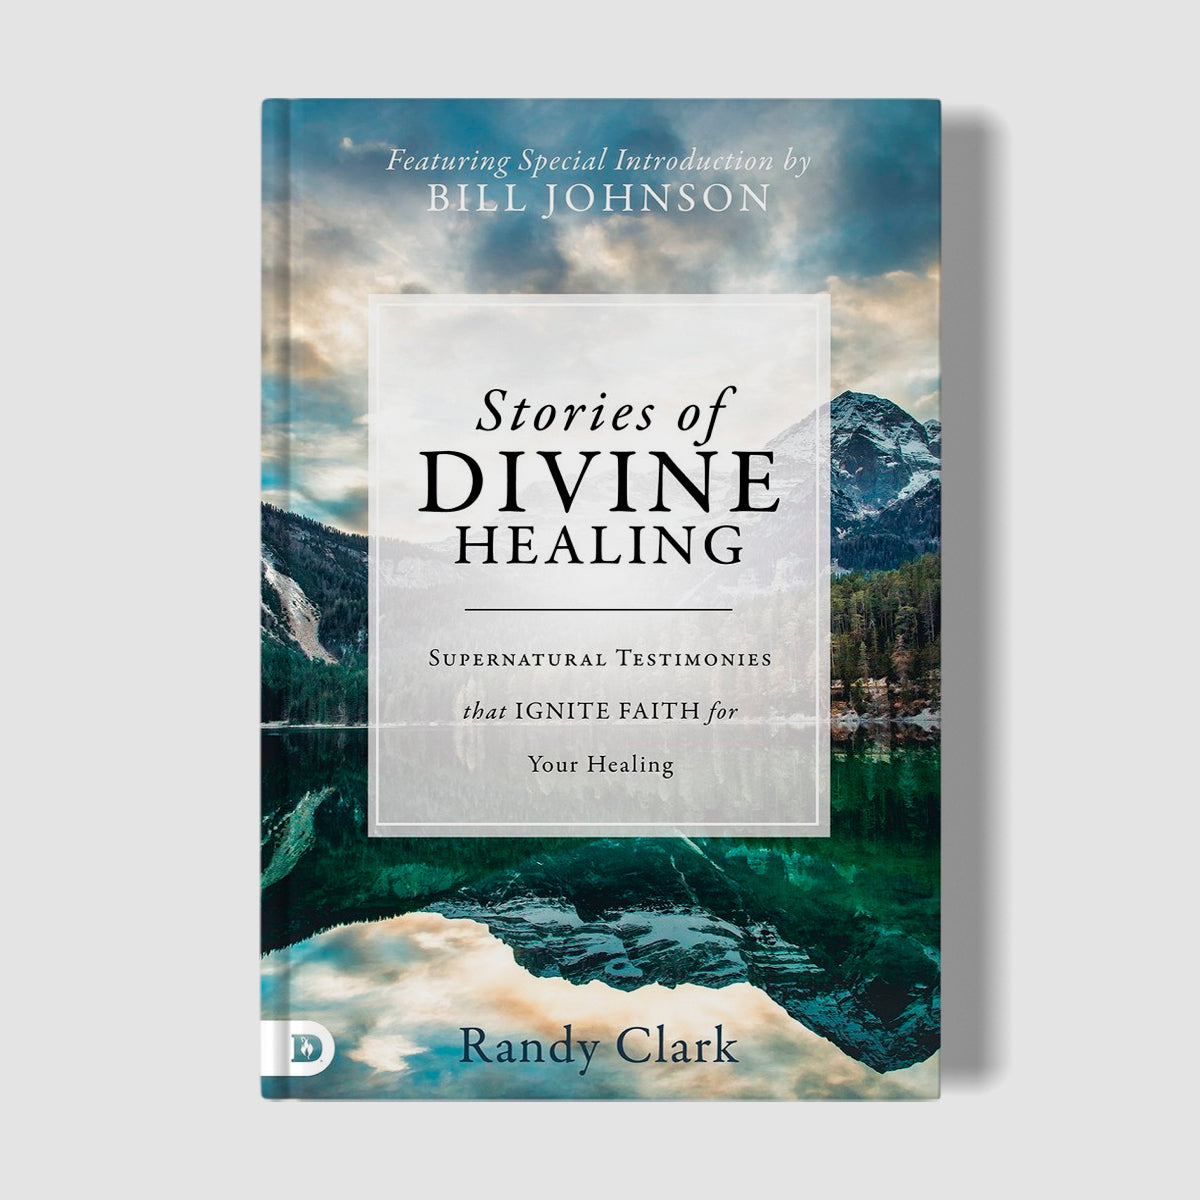 Stories of Divine Healing